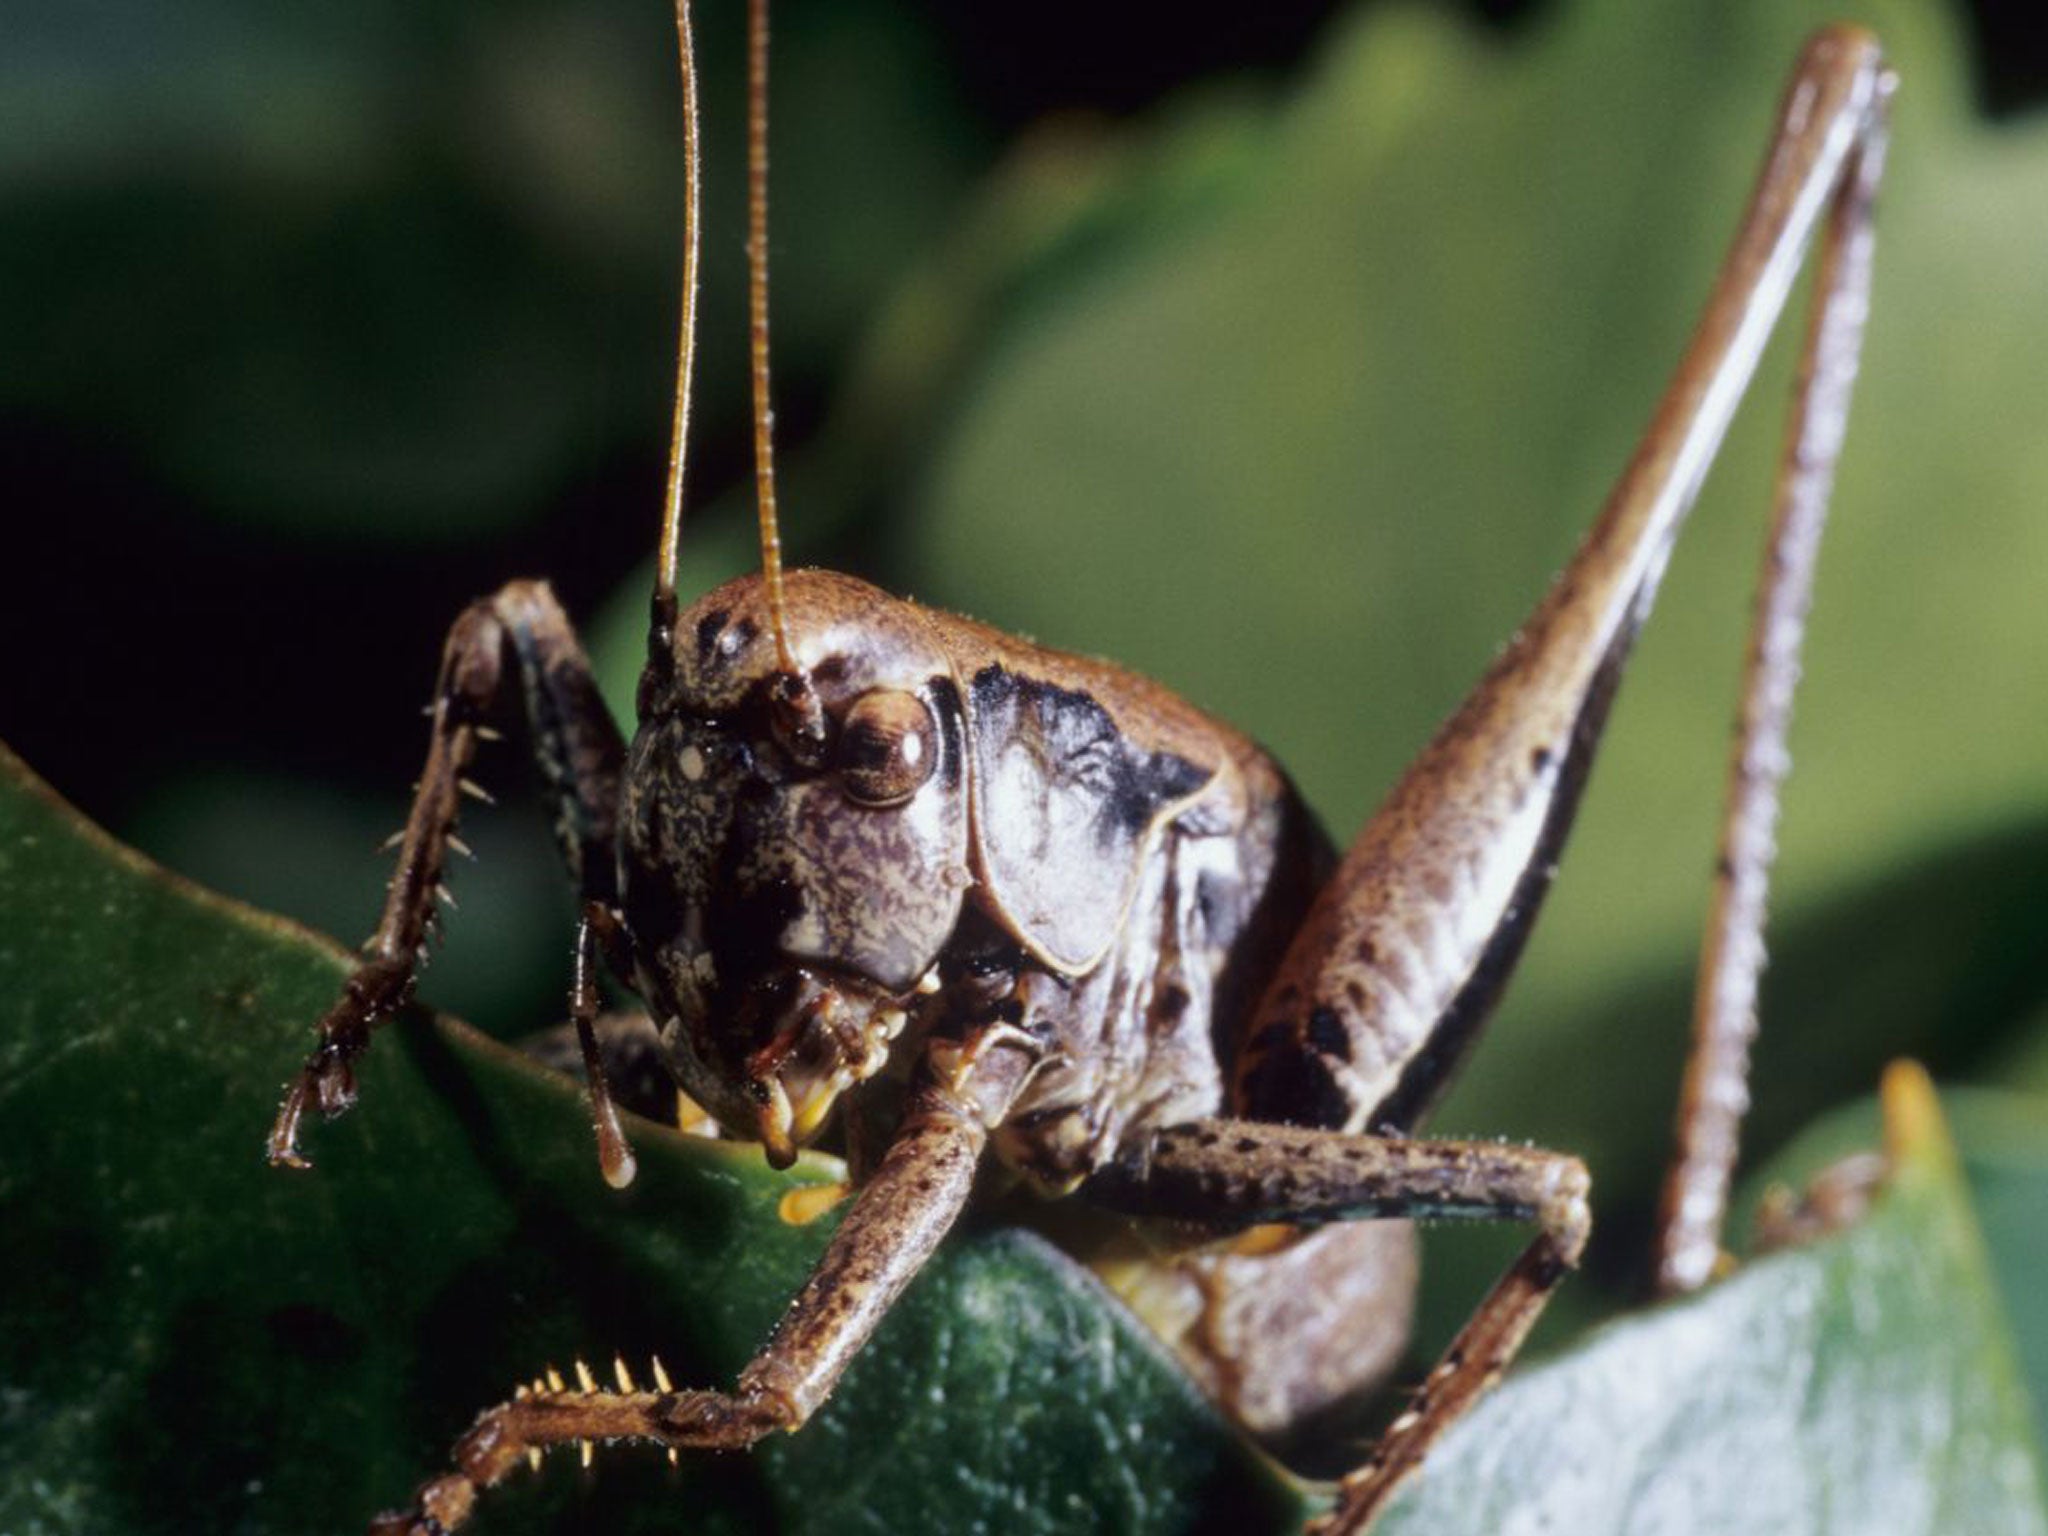 Dark Bush-Cricket (Pholidoptera griseoaptera) in the uk